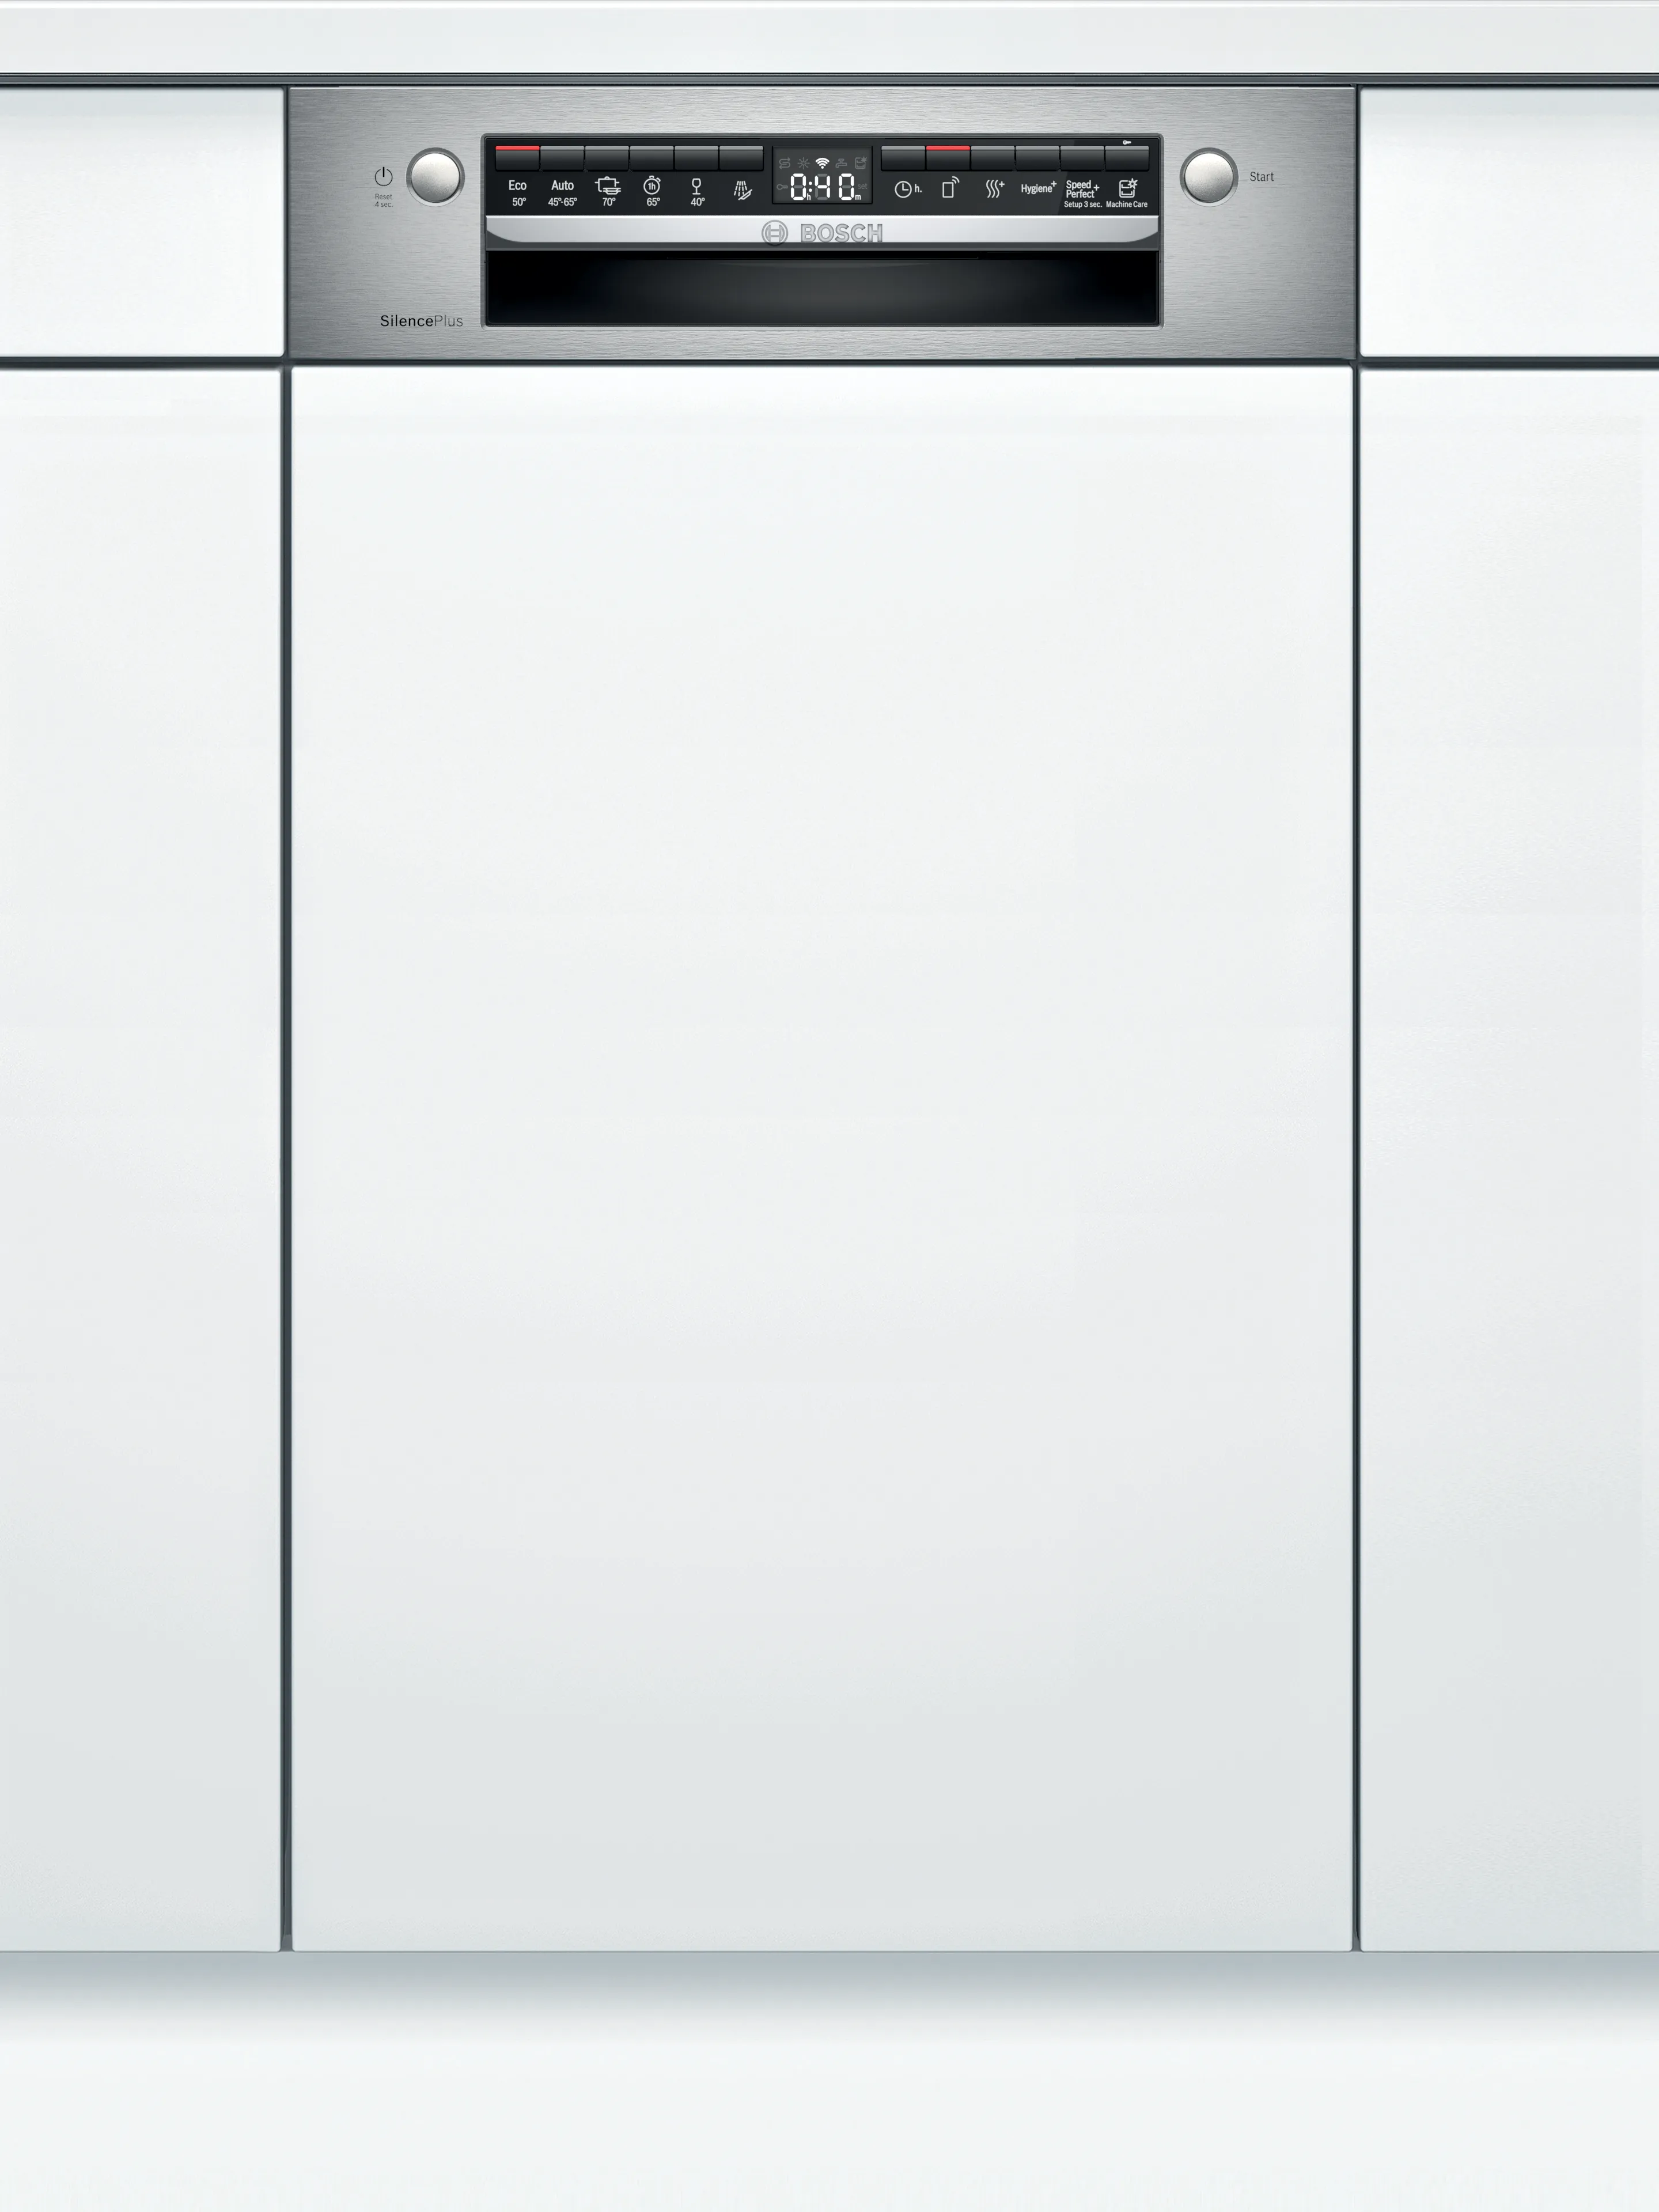 Series 4 セミ一体型食器洗い機 45 cm ステンレス鋼 